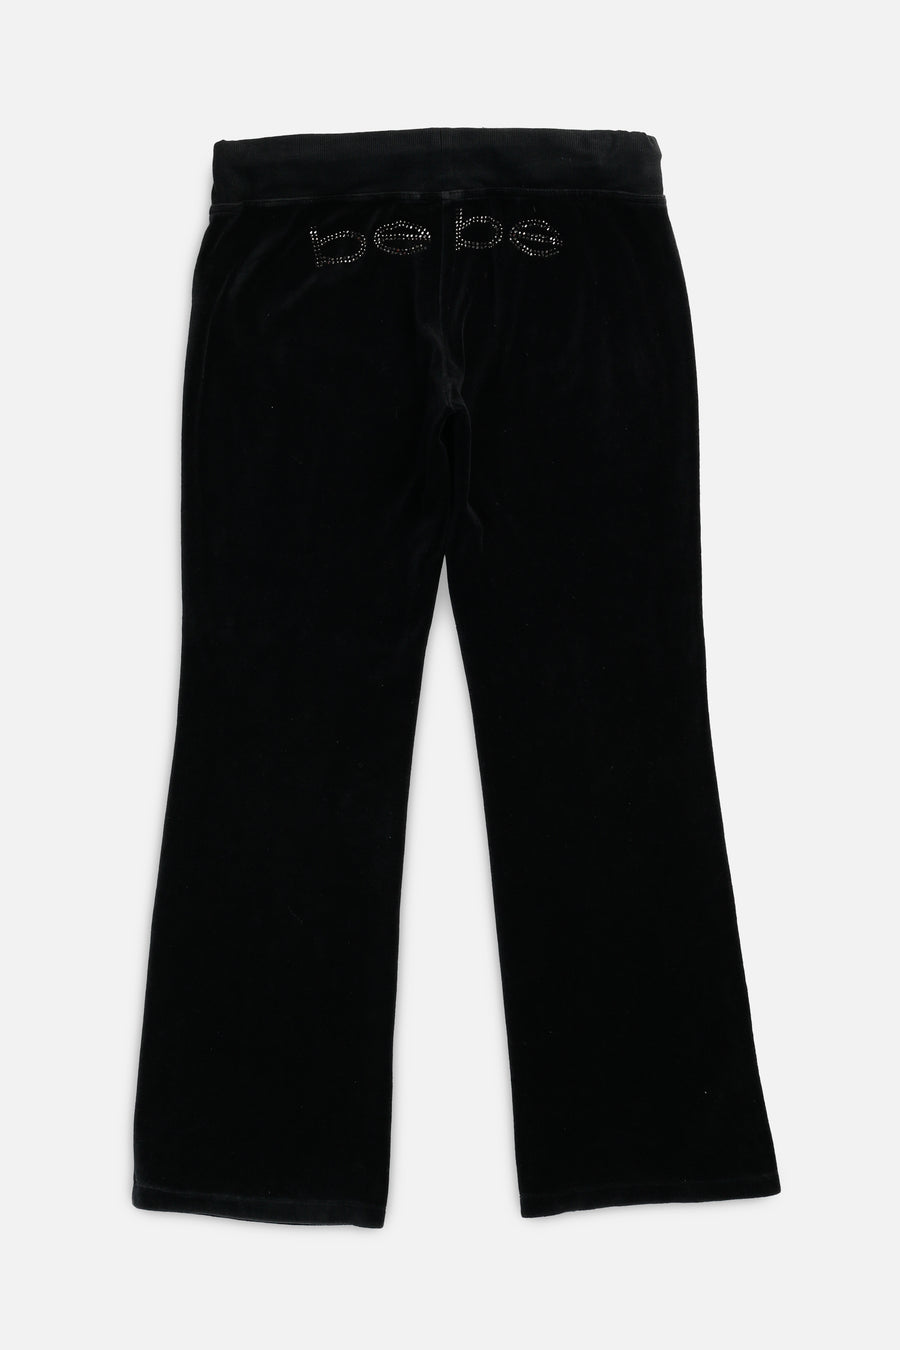 Vintage Bebe Velour Pants - S